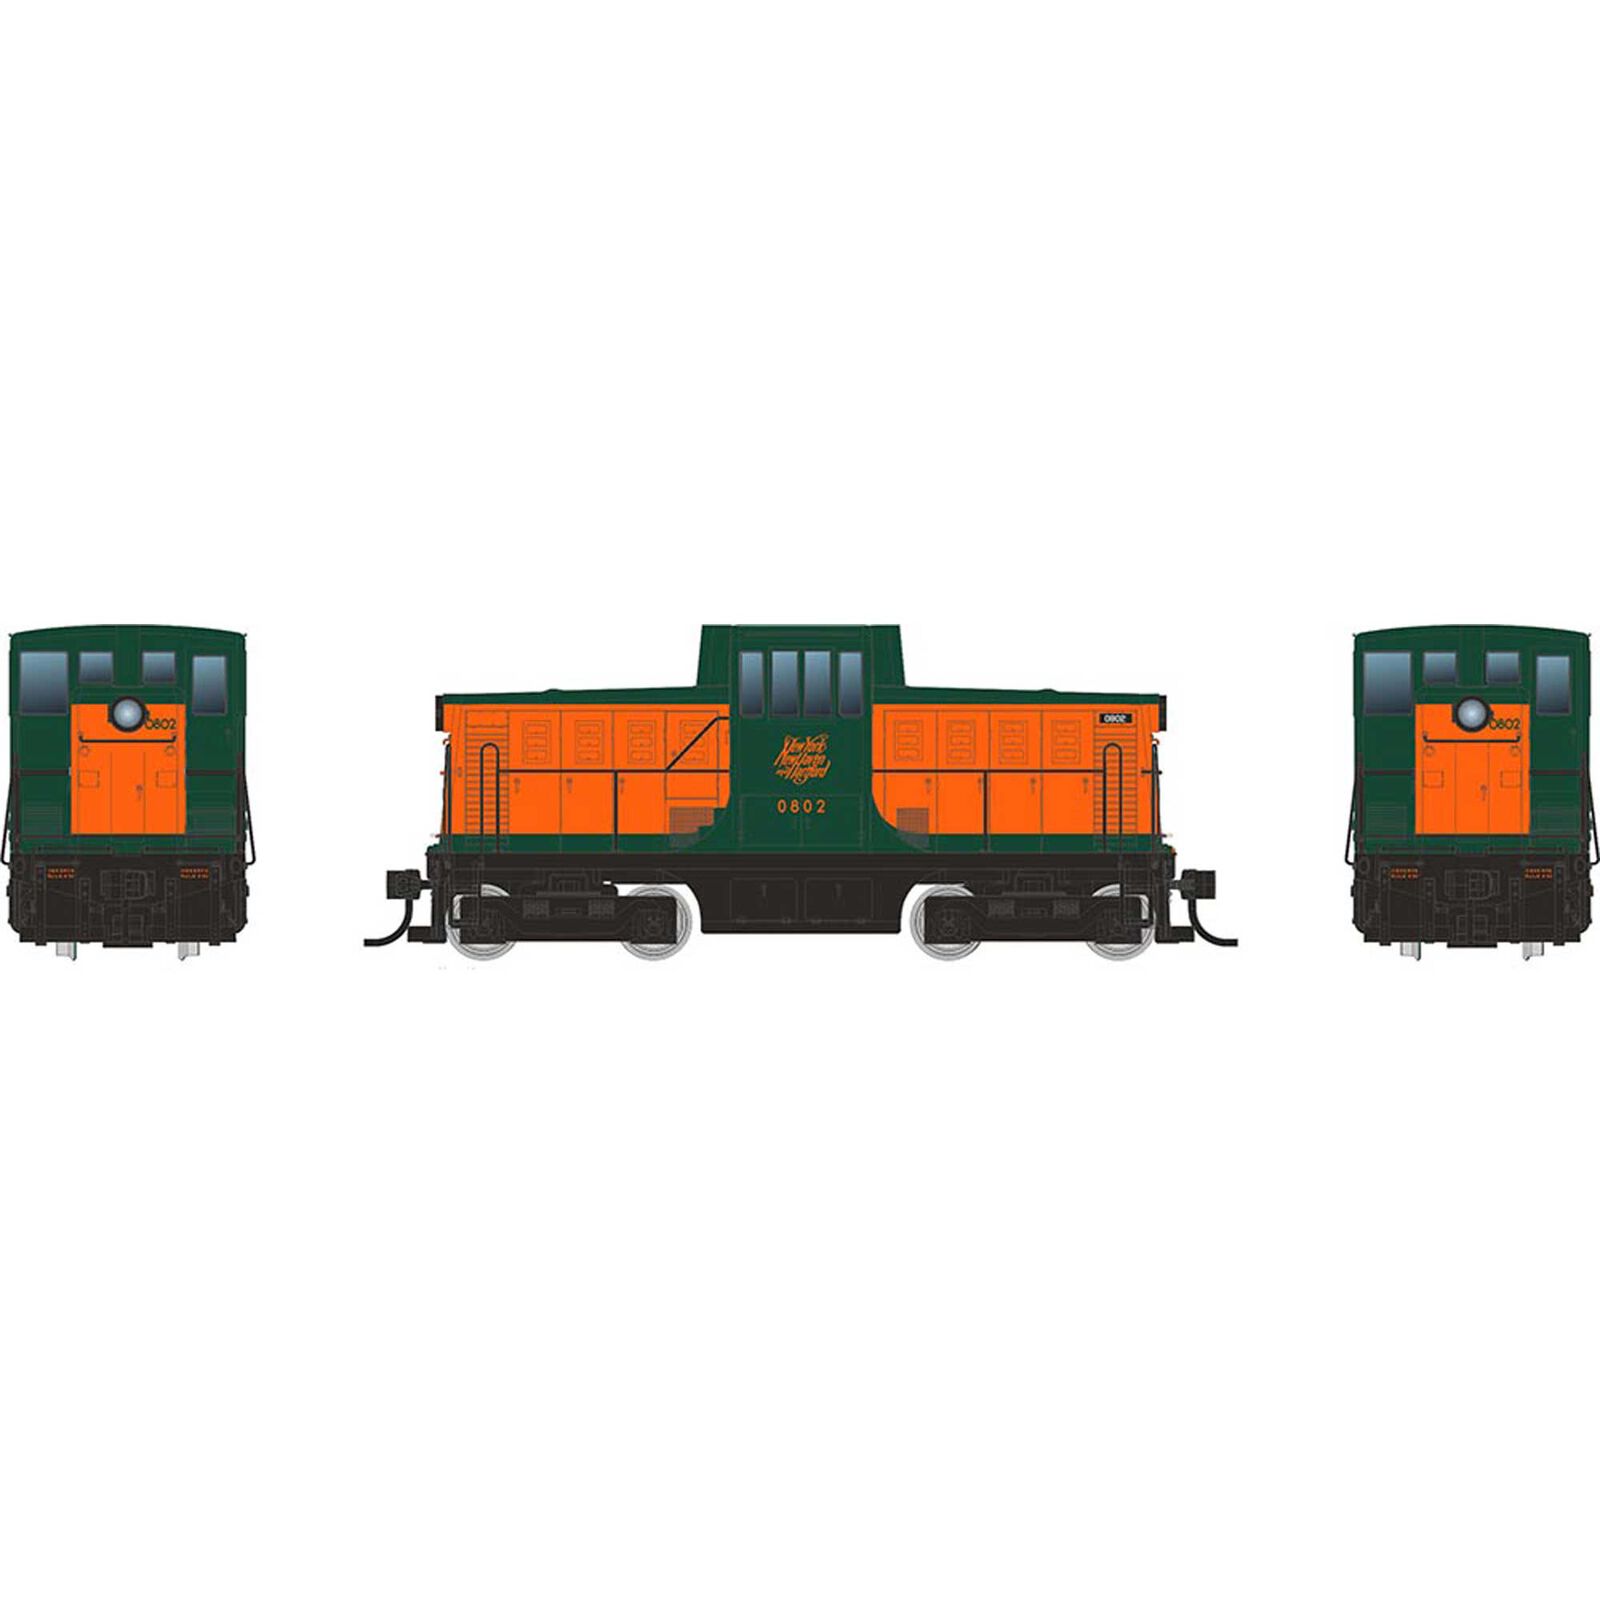 HO GE 44 Tonner Switcher Locomotive, NH Warm Orange #0801